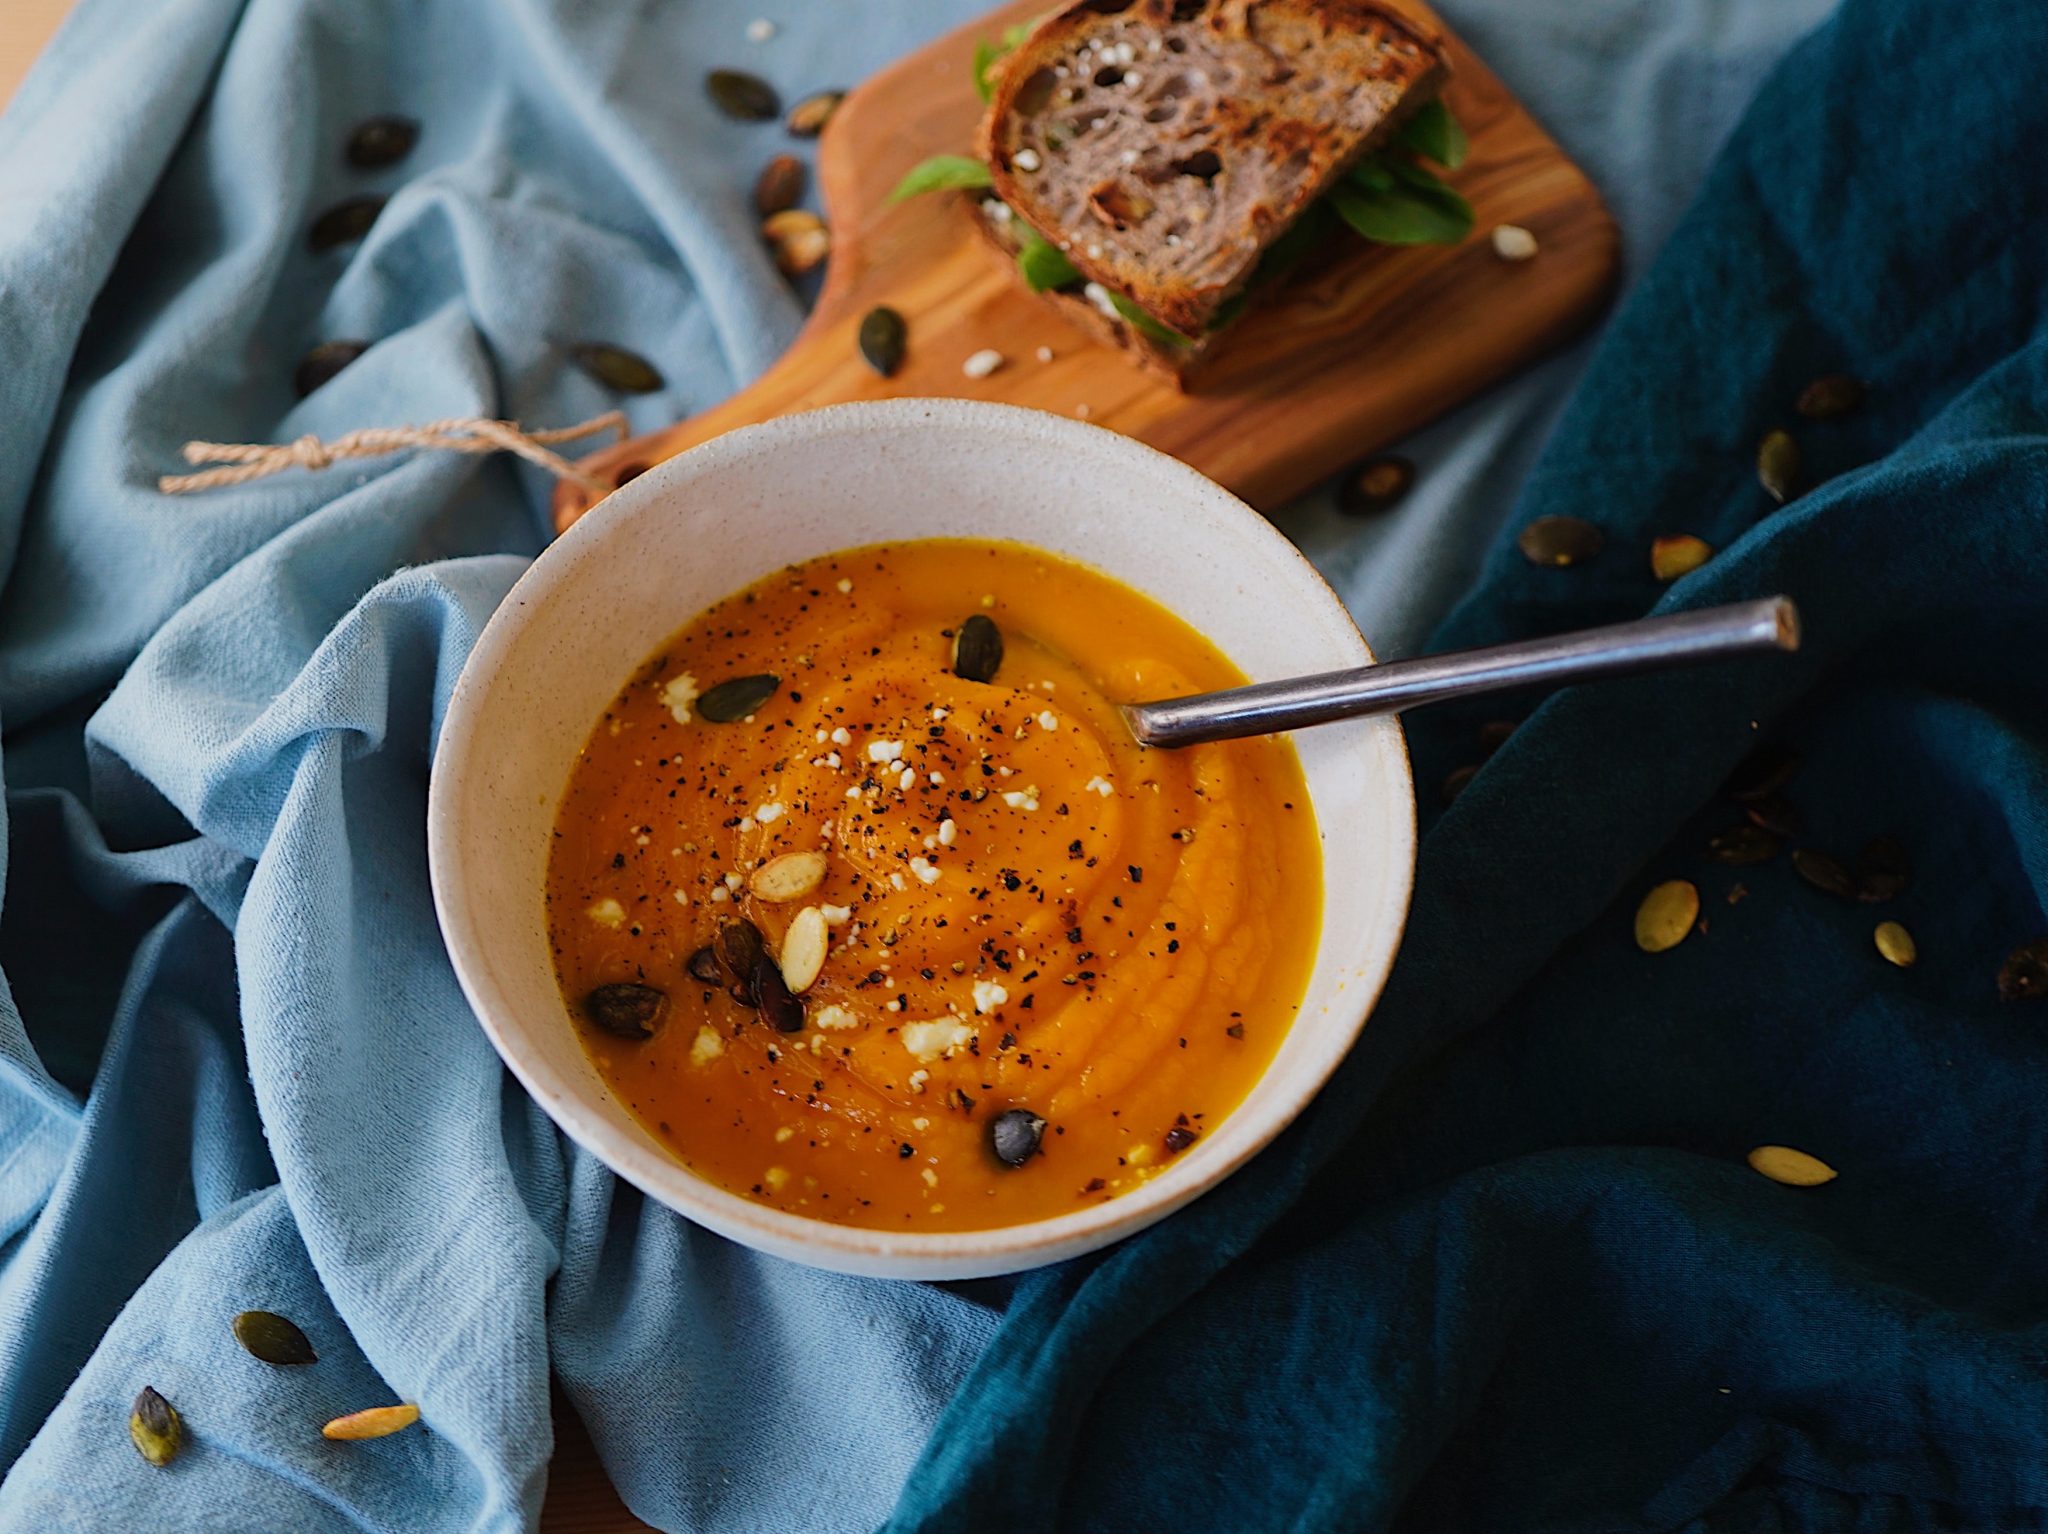 Winter warmer soup recipes